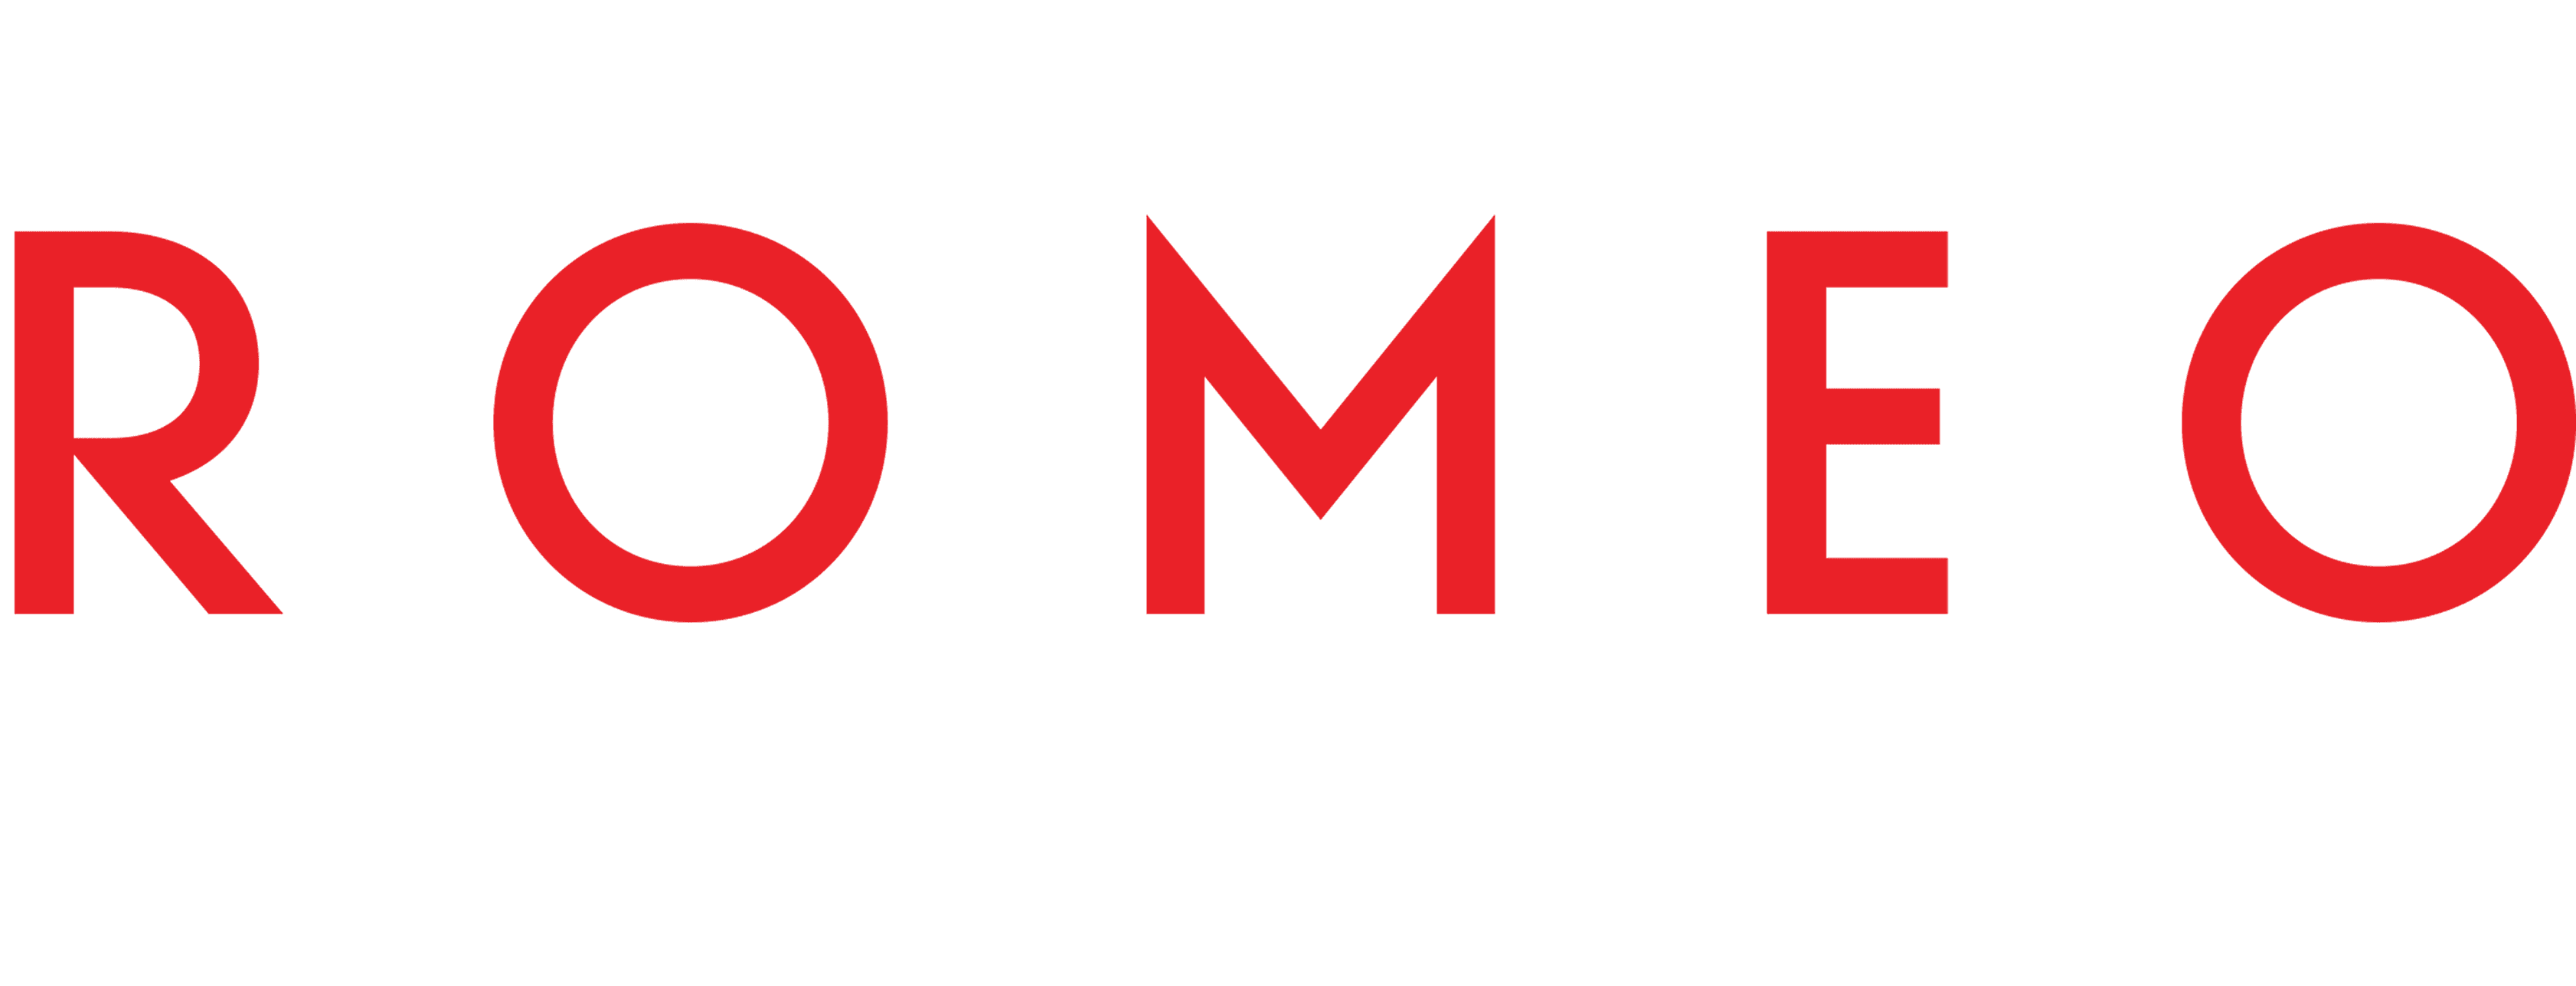 The Romeo Section logo